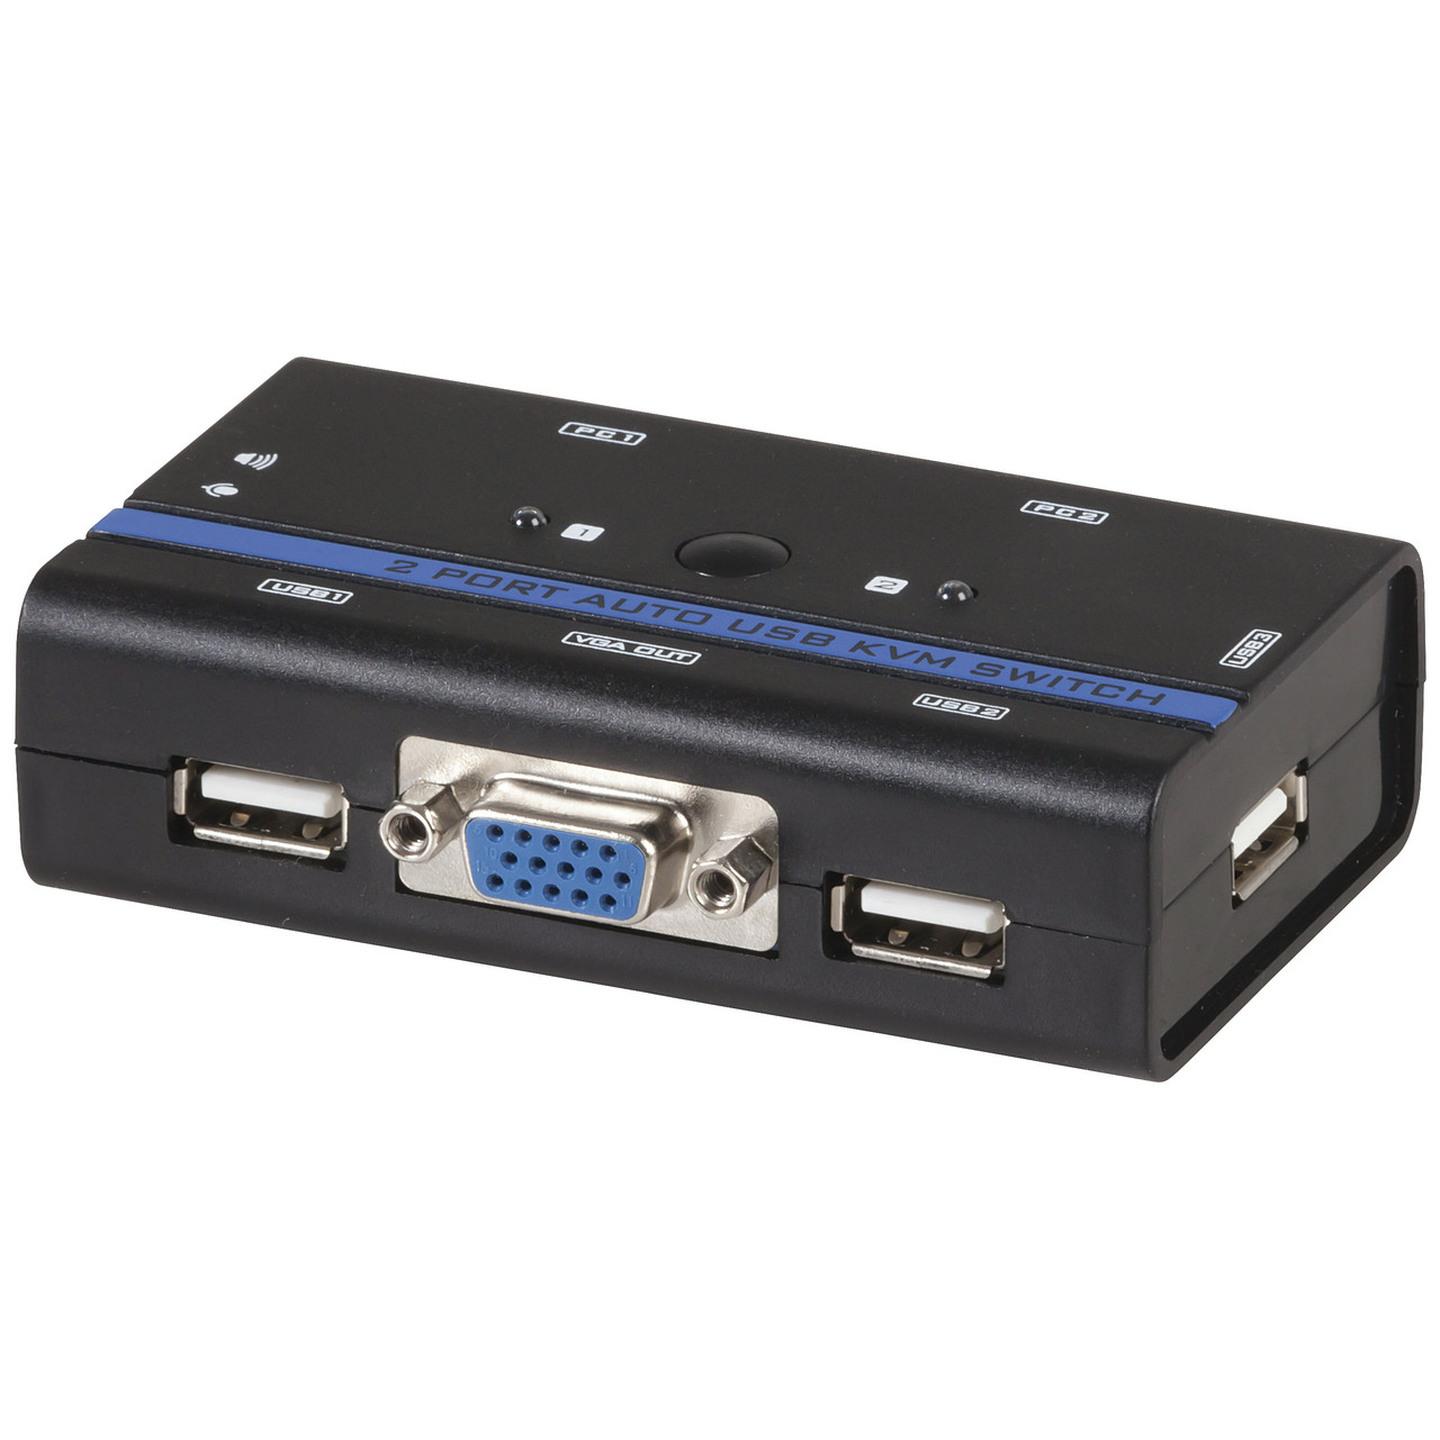 2-Port USB KVM Switch